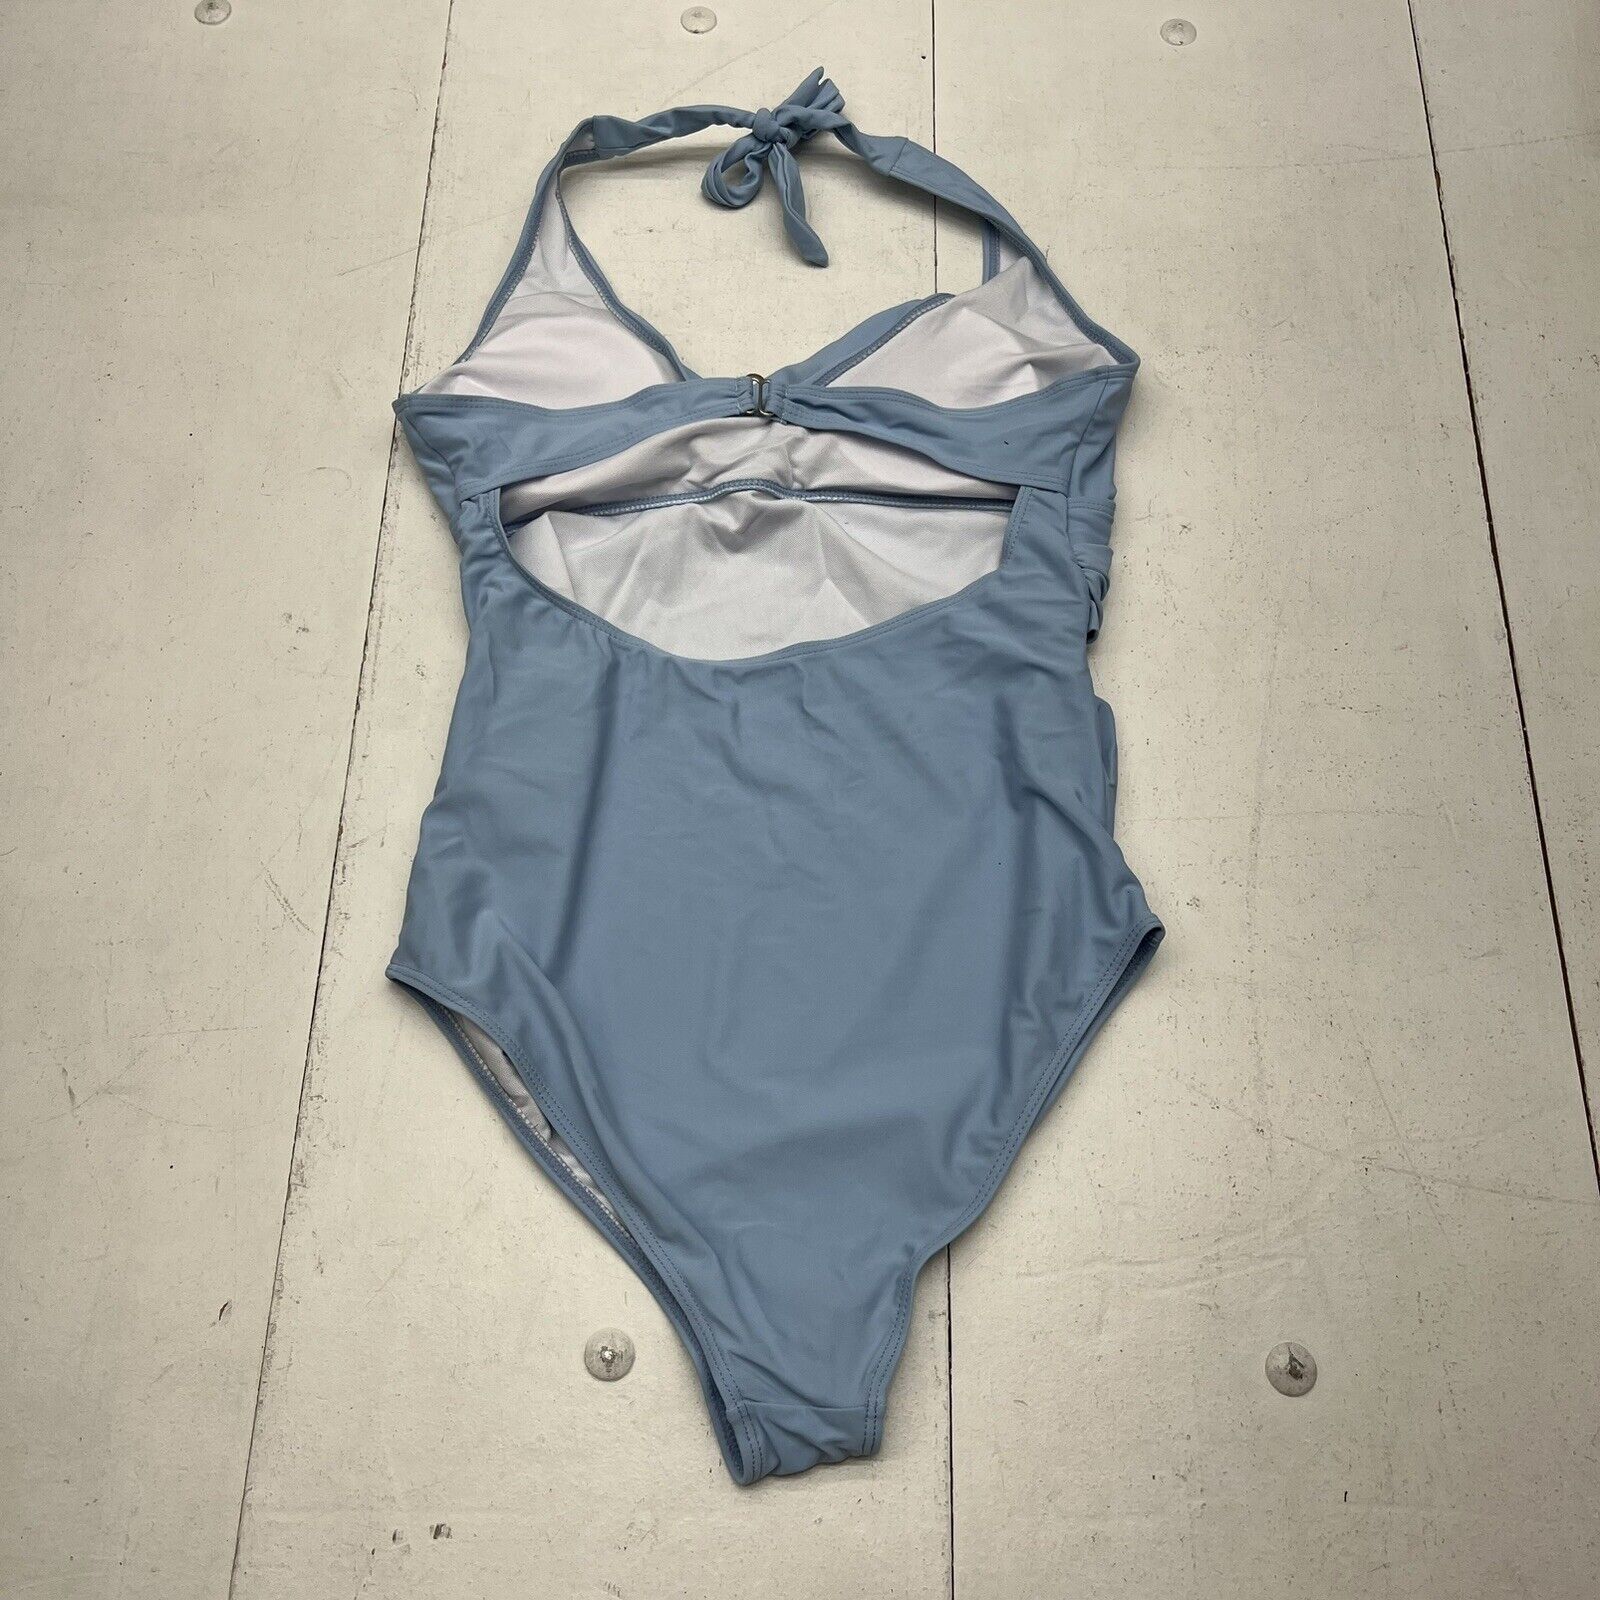 MakeMeChic Women's Maternity 2 Piece Bikini Swimsuit One Shoulder